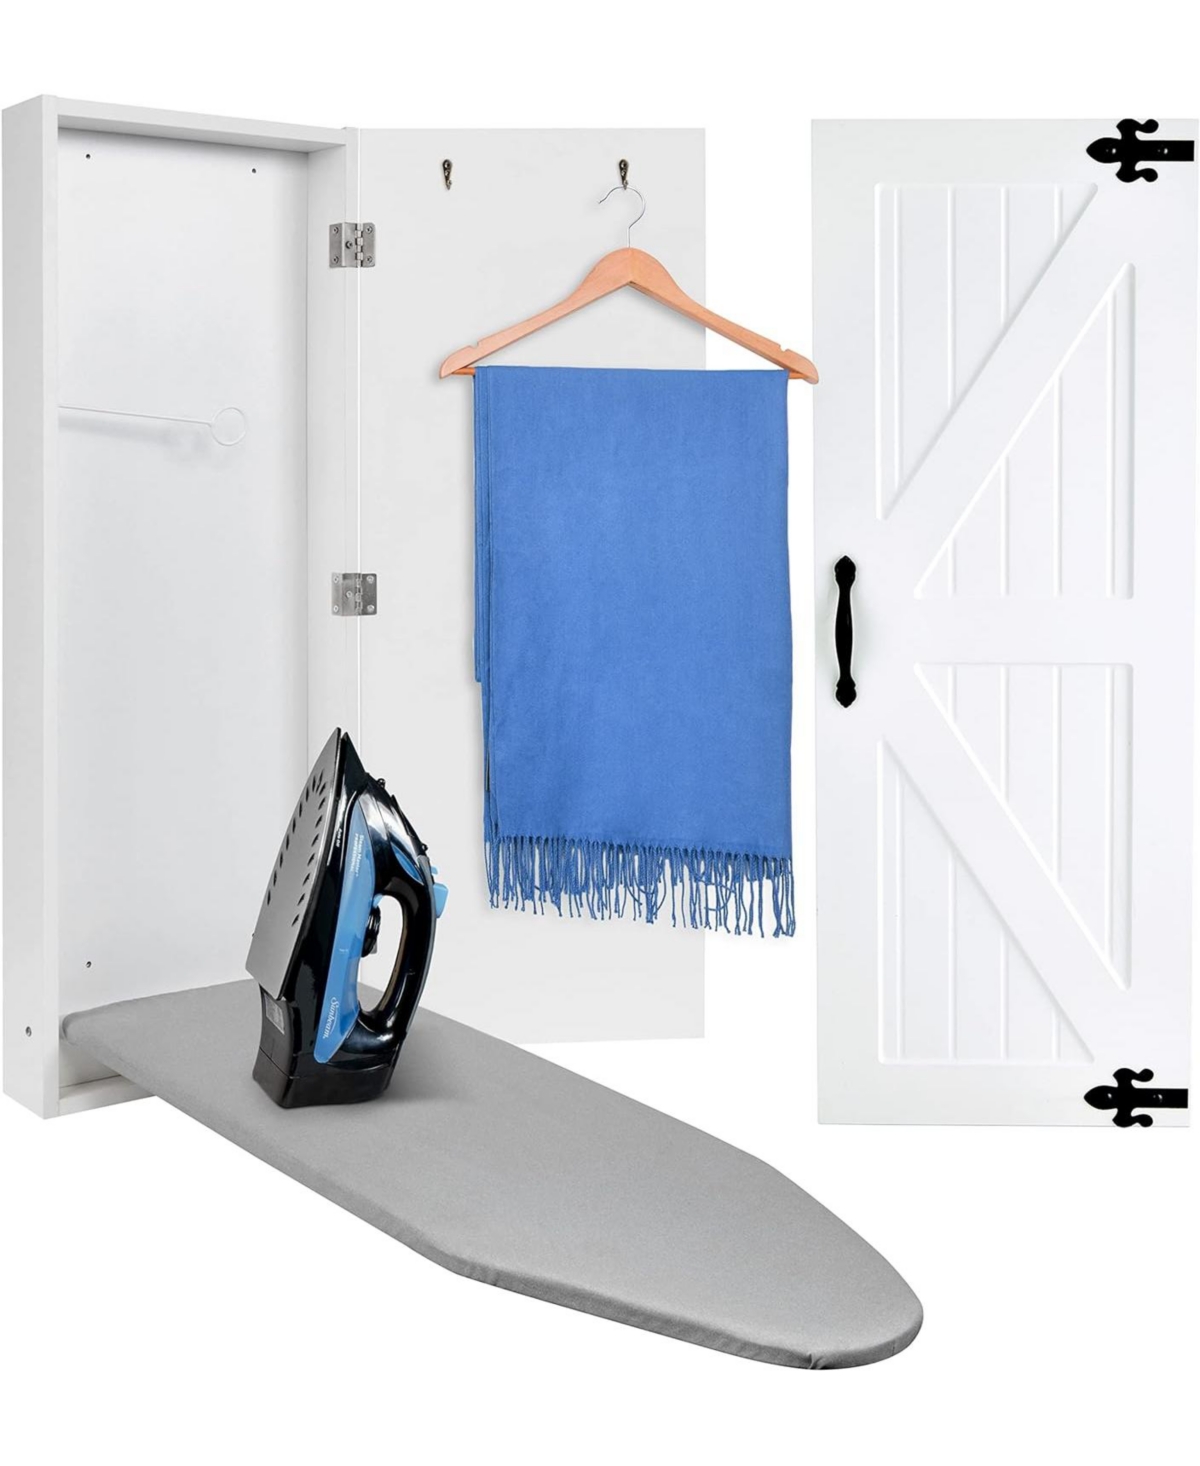 Ironing Board w/Farmhouse Door, Wall Mount Iron Board Holder - White